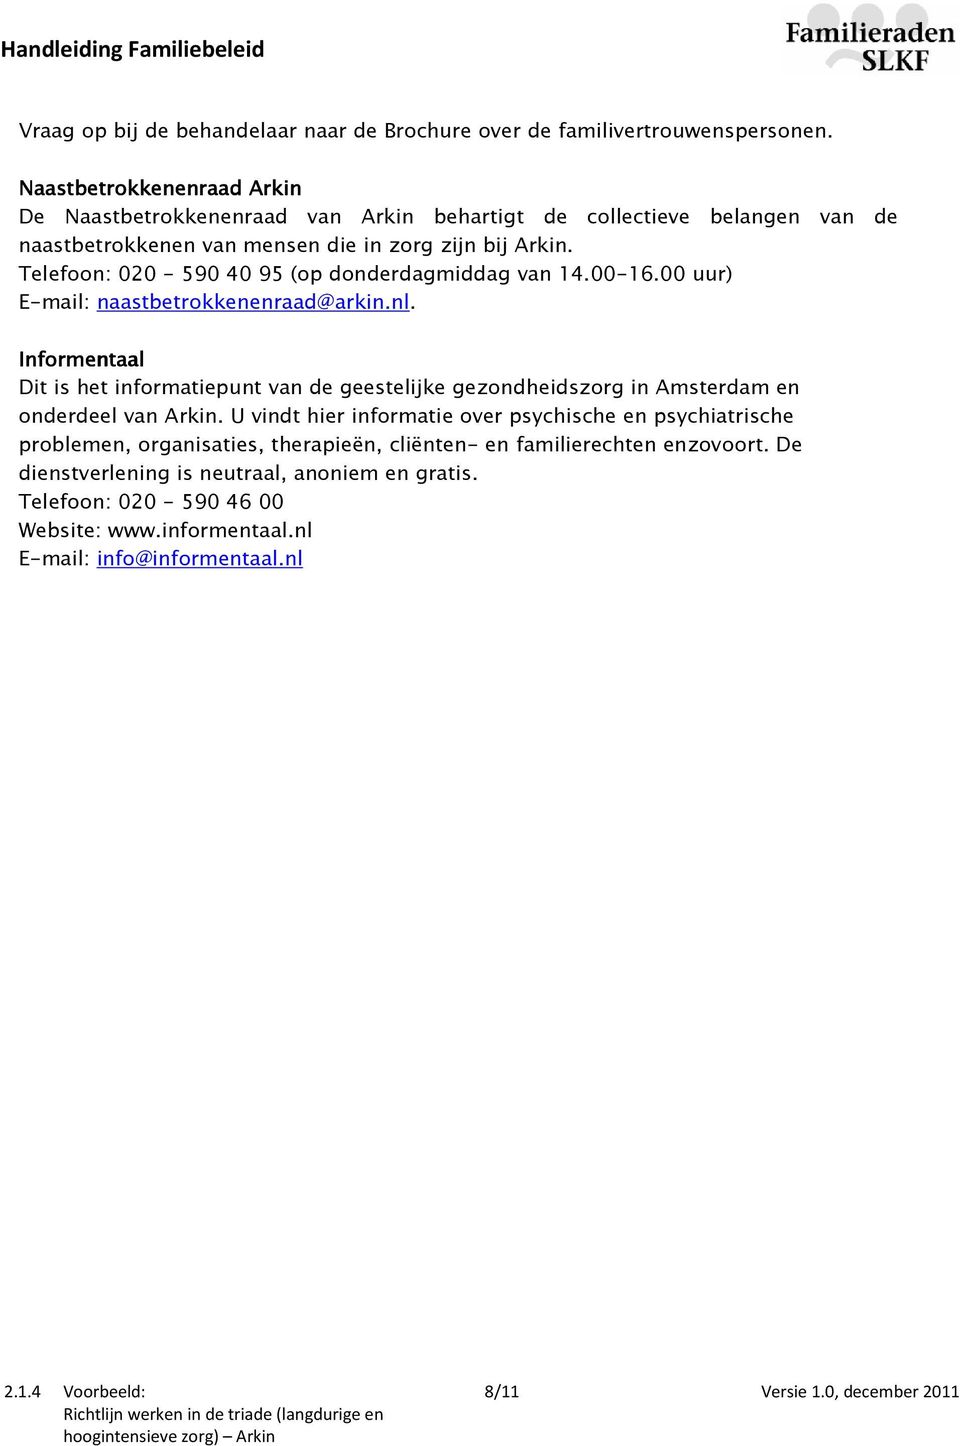 Telefoon: 020-590 40 95 (op donderdagmiddag van 14.00-16.00 uur) E-mail: naastbetrokkenenraad@arkin.nl.